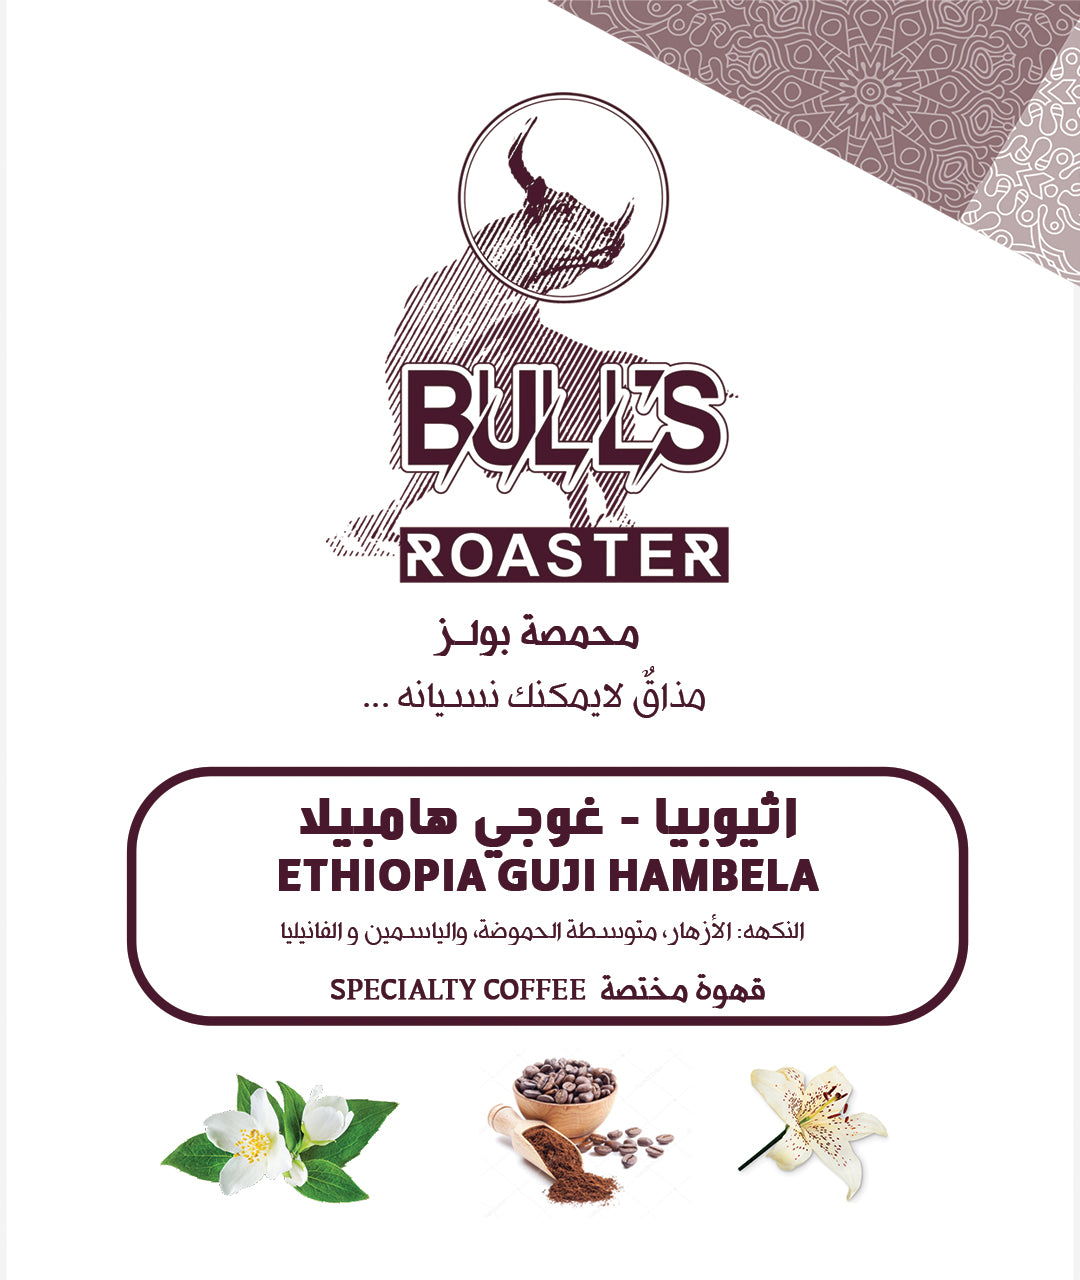 Guji specialty coffee - Bull's Roastery